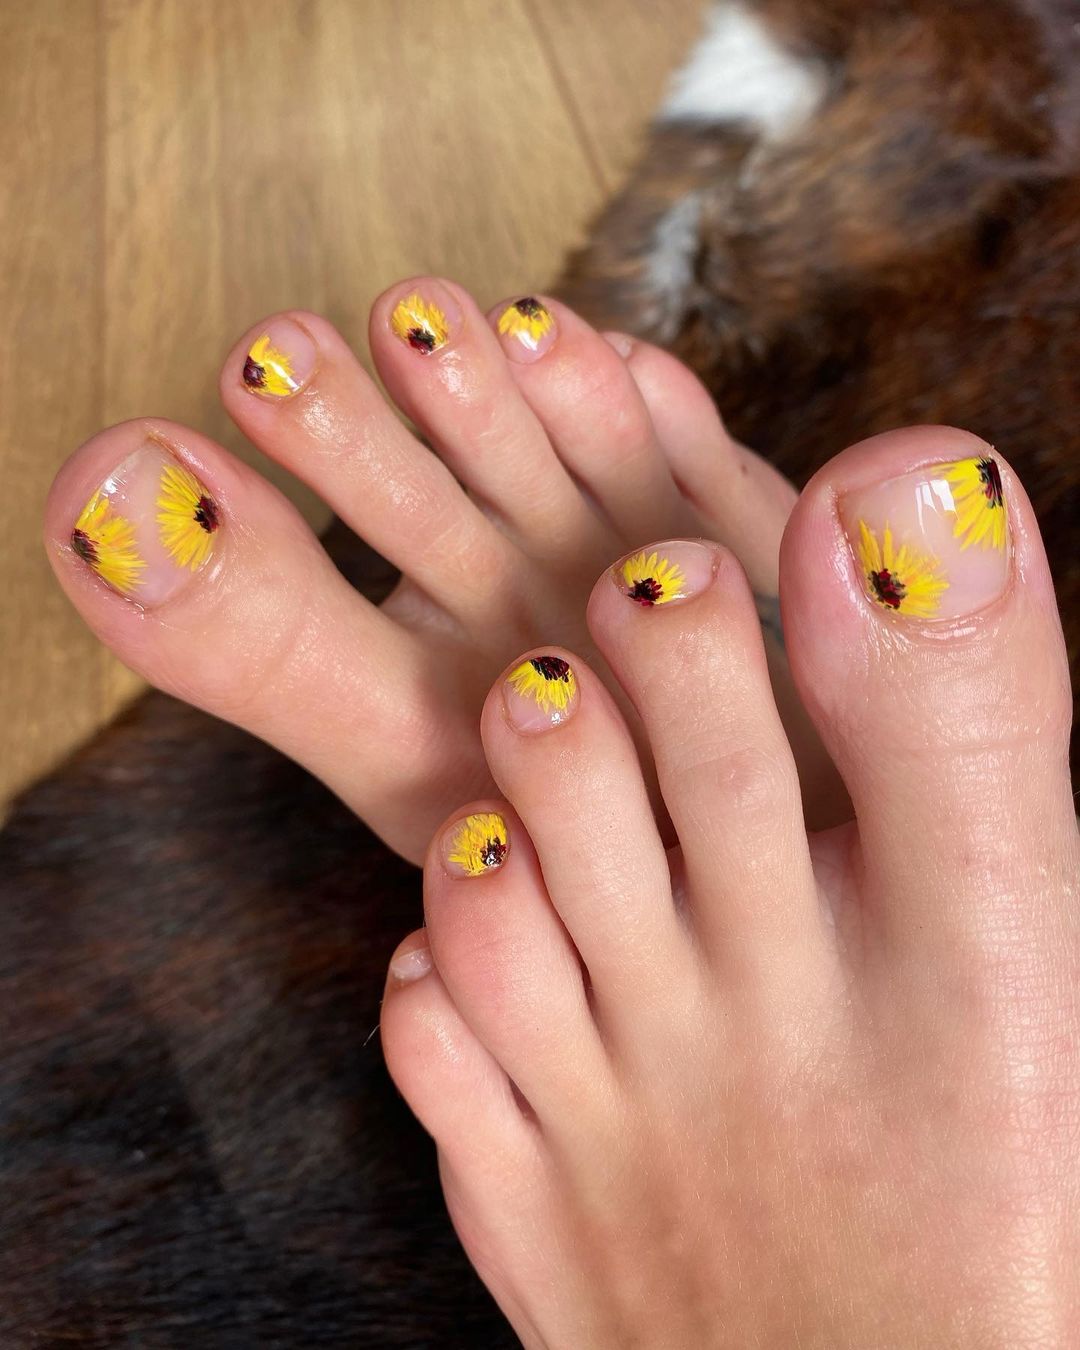 It will soon be summer, I made designs on my toenails. : r/NailArt